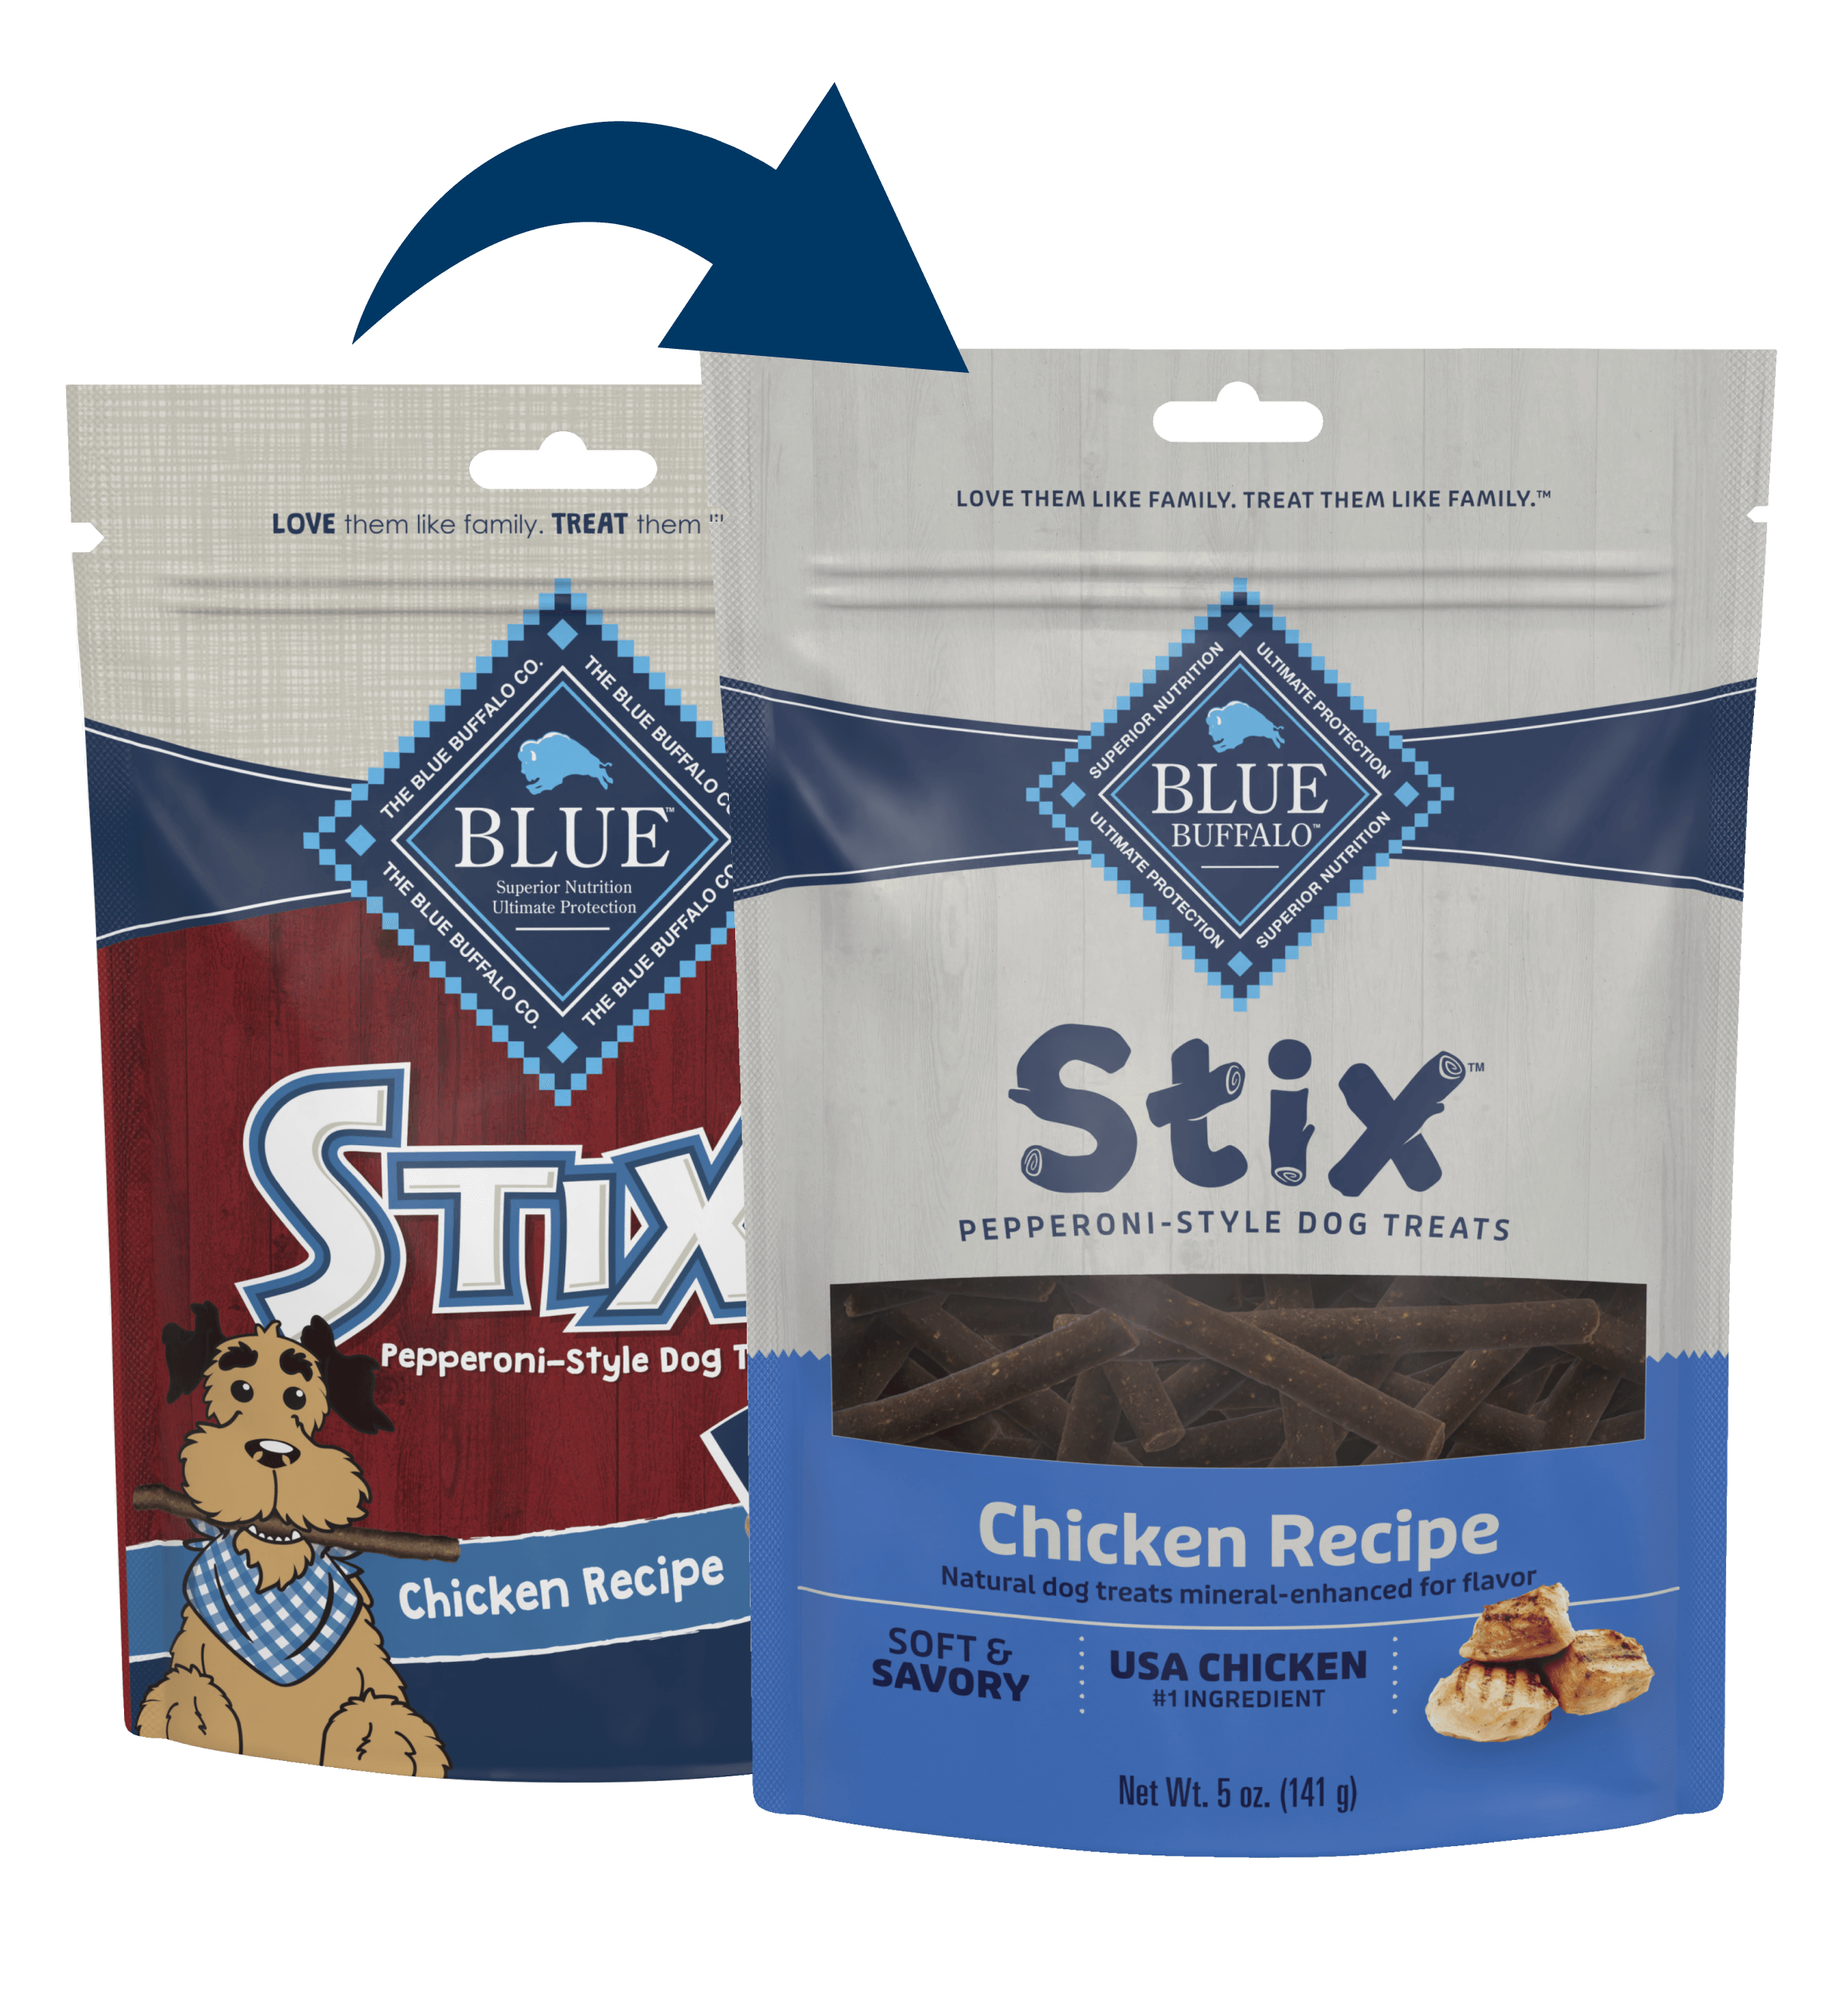 A bag of BLUE Stix Pepperoni-Style Dog Treats Chicken Recipe dog food